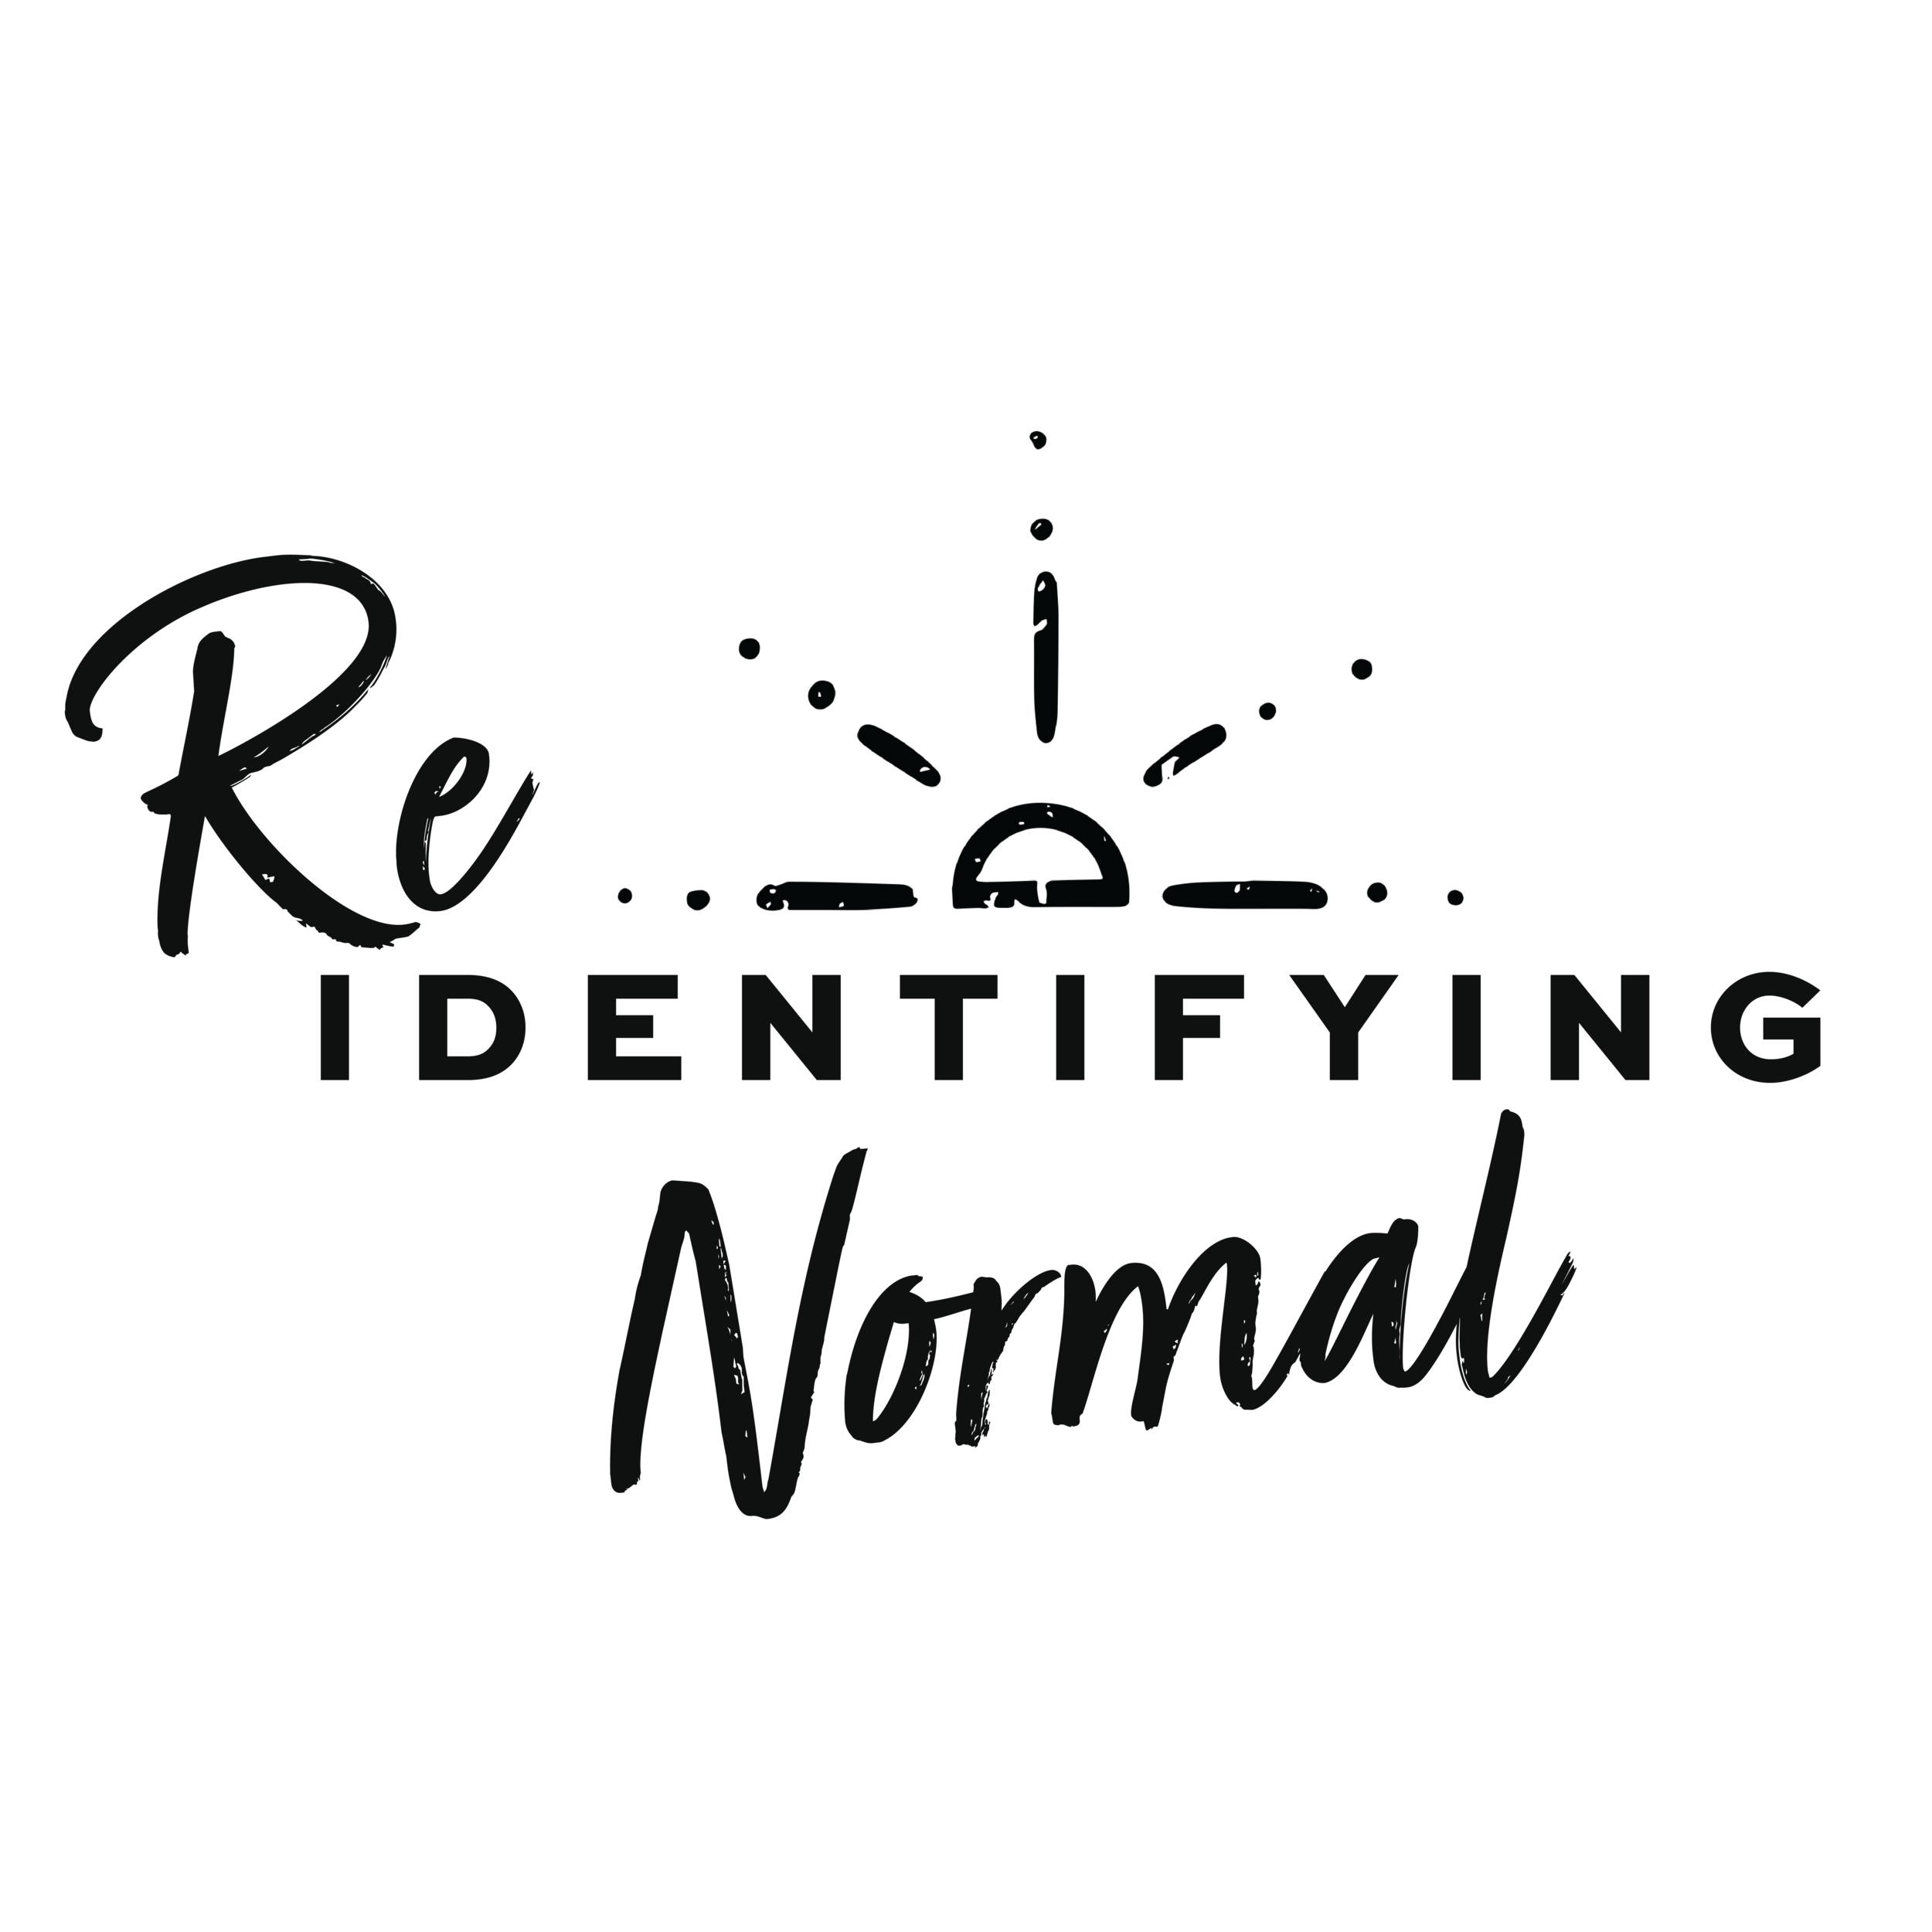 Reidentifying Normal